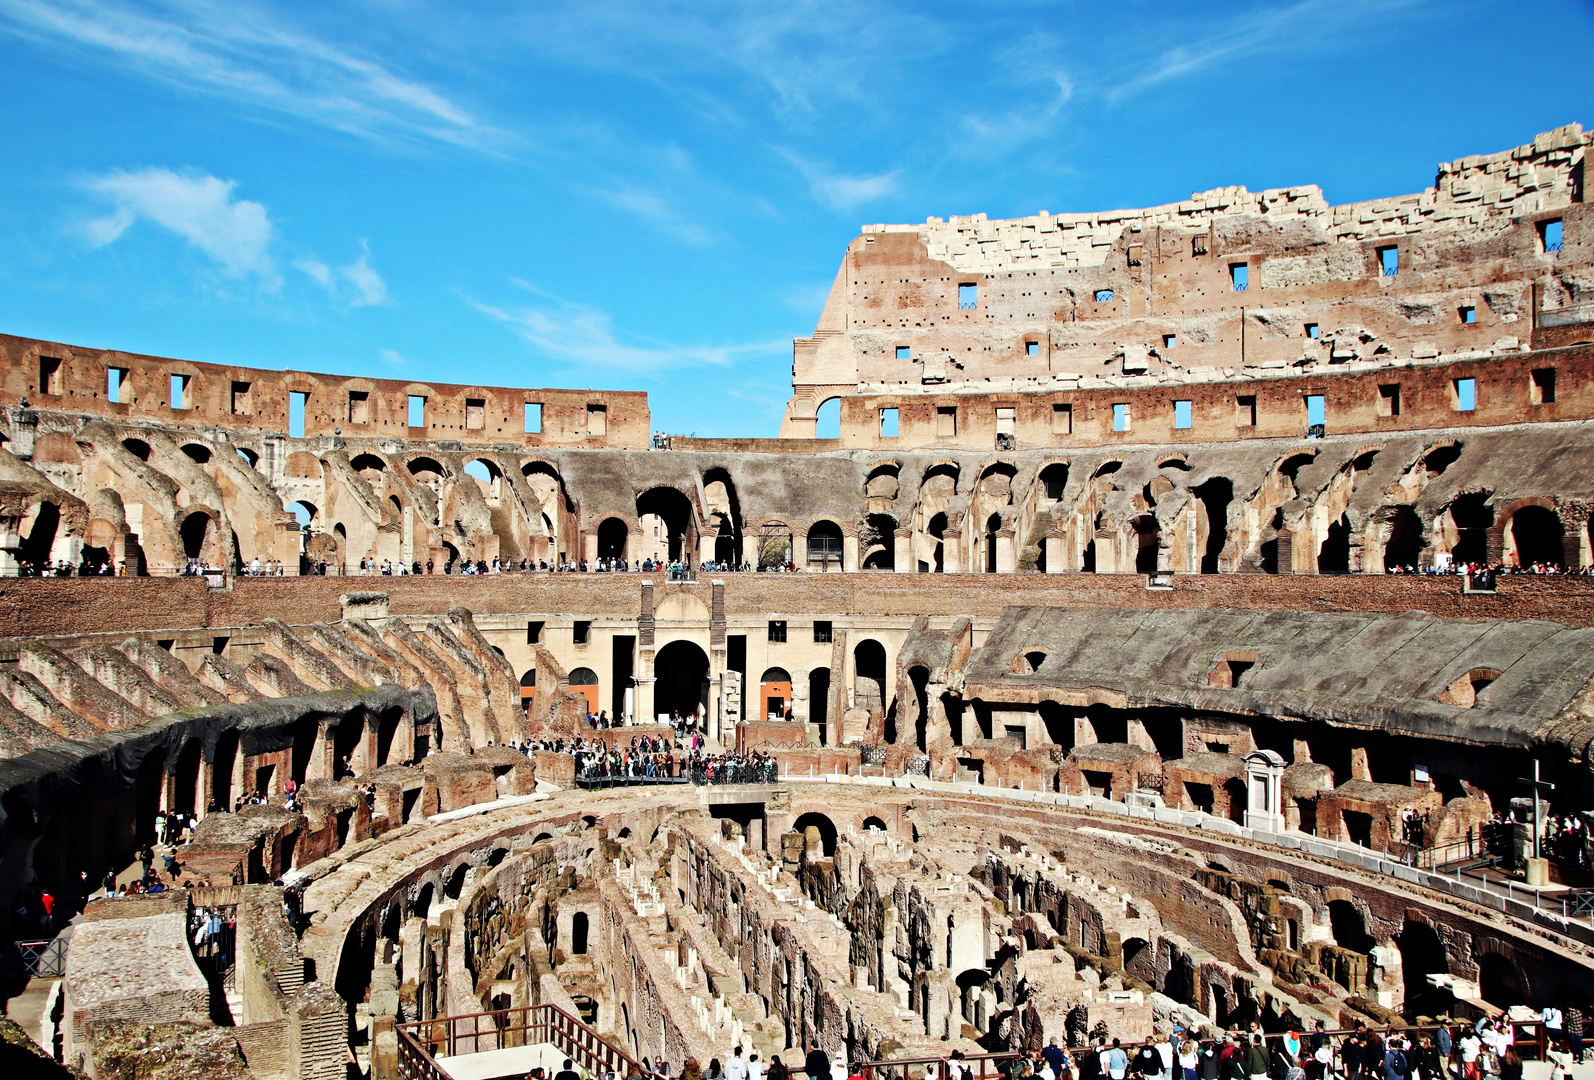 Amphitheater in Rom